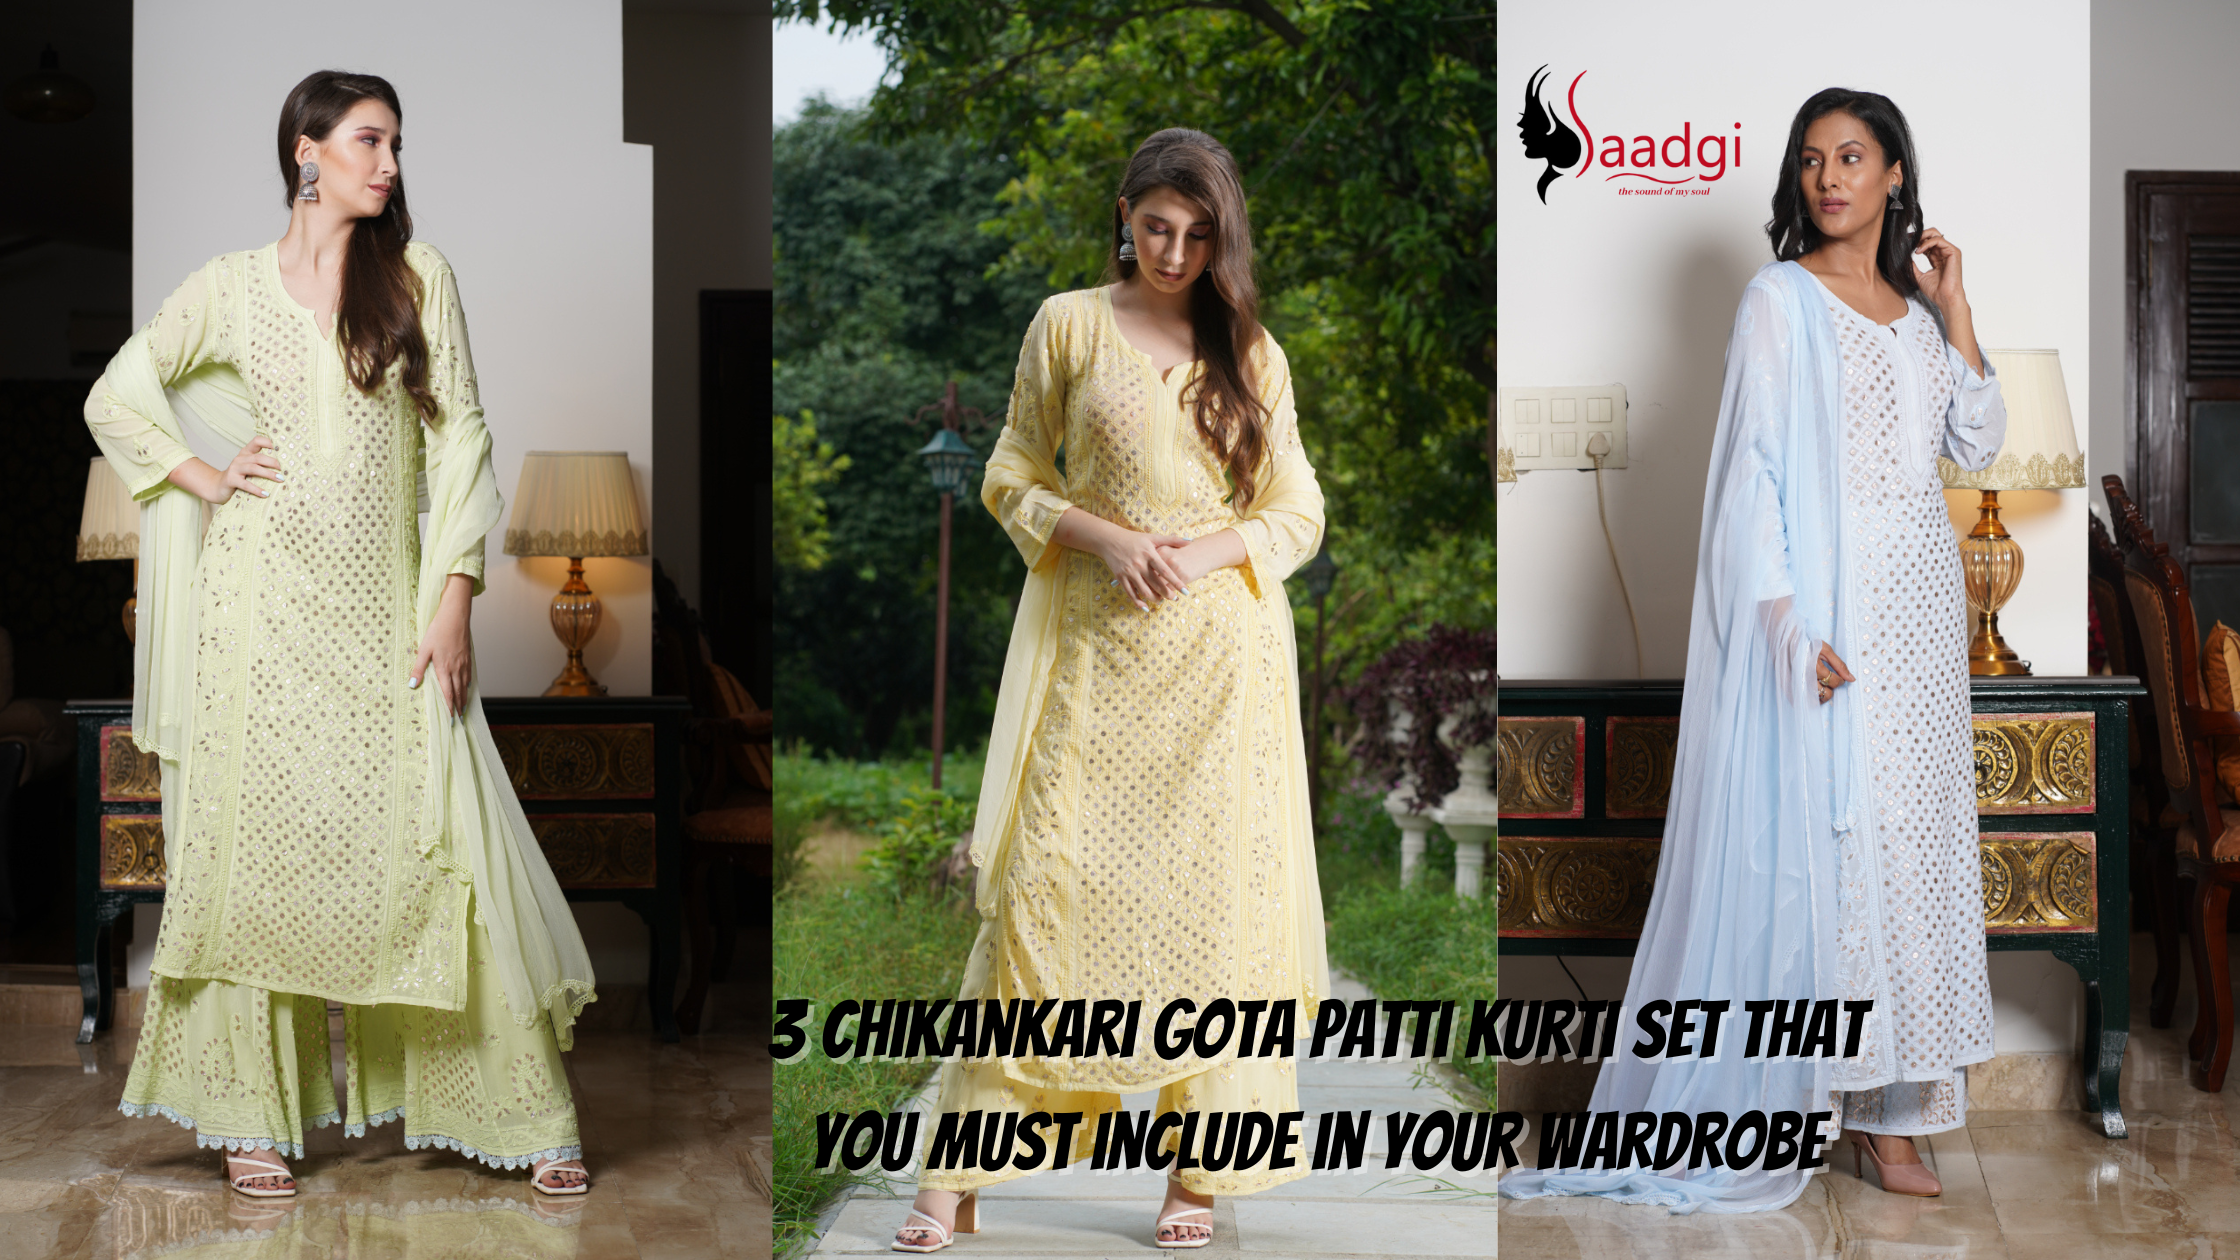 3 Chikankari gota patti kurti set that you must include in your wardrobe: